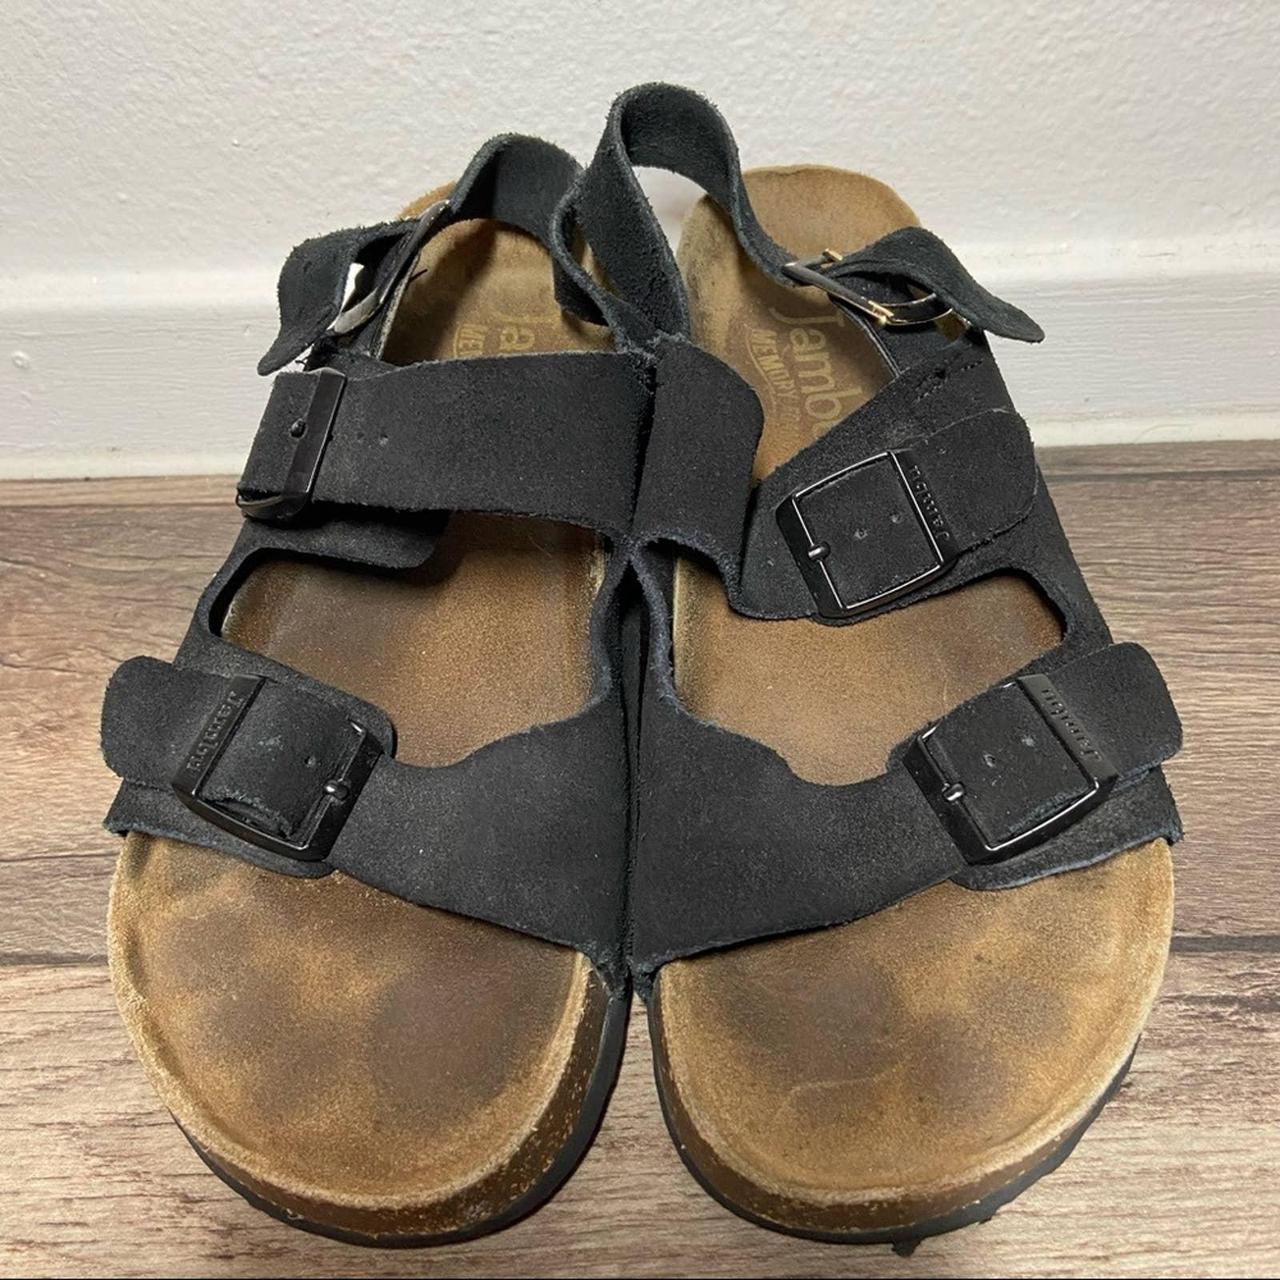 Product Image 2 - Jambu Woodstock Sandals Suede Leather